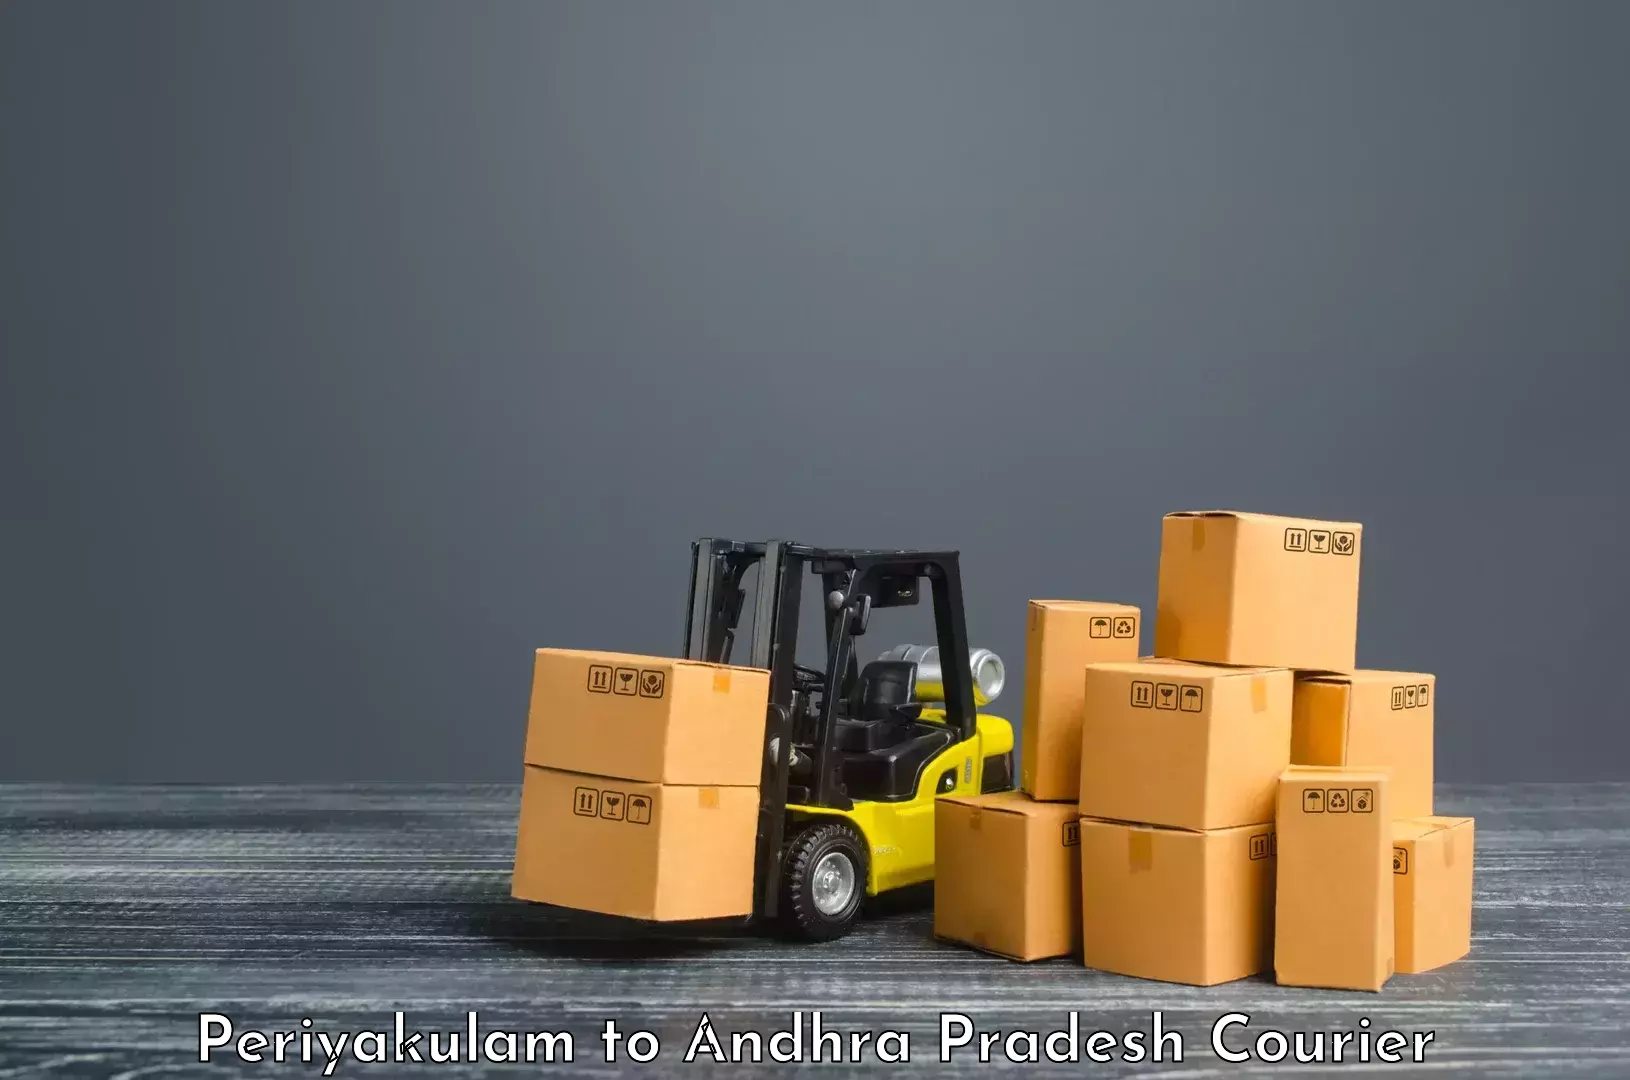 Efficient cargo handling Periyakulam to Andhra Pradesh